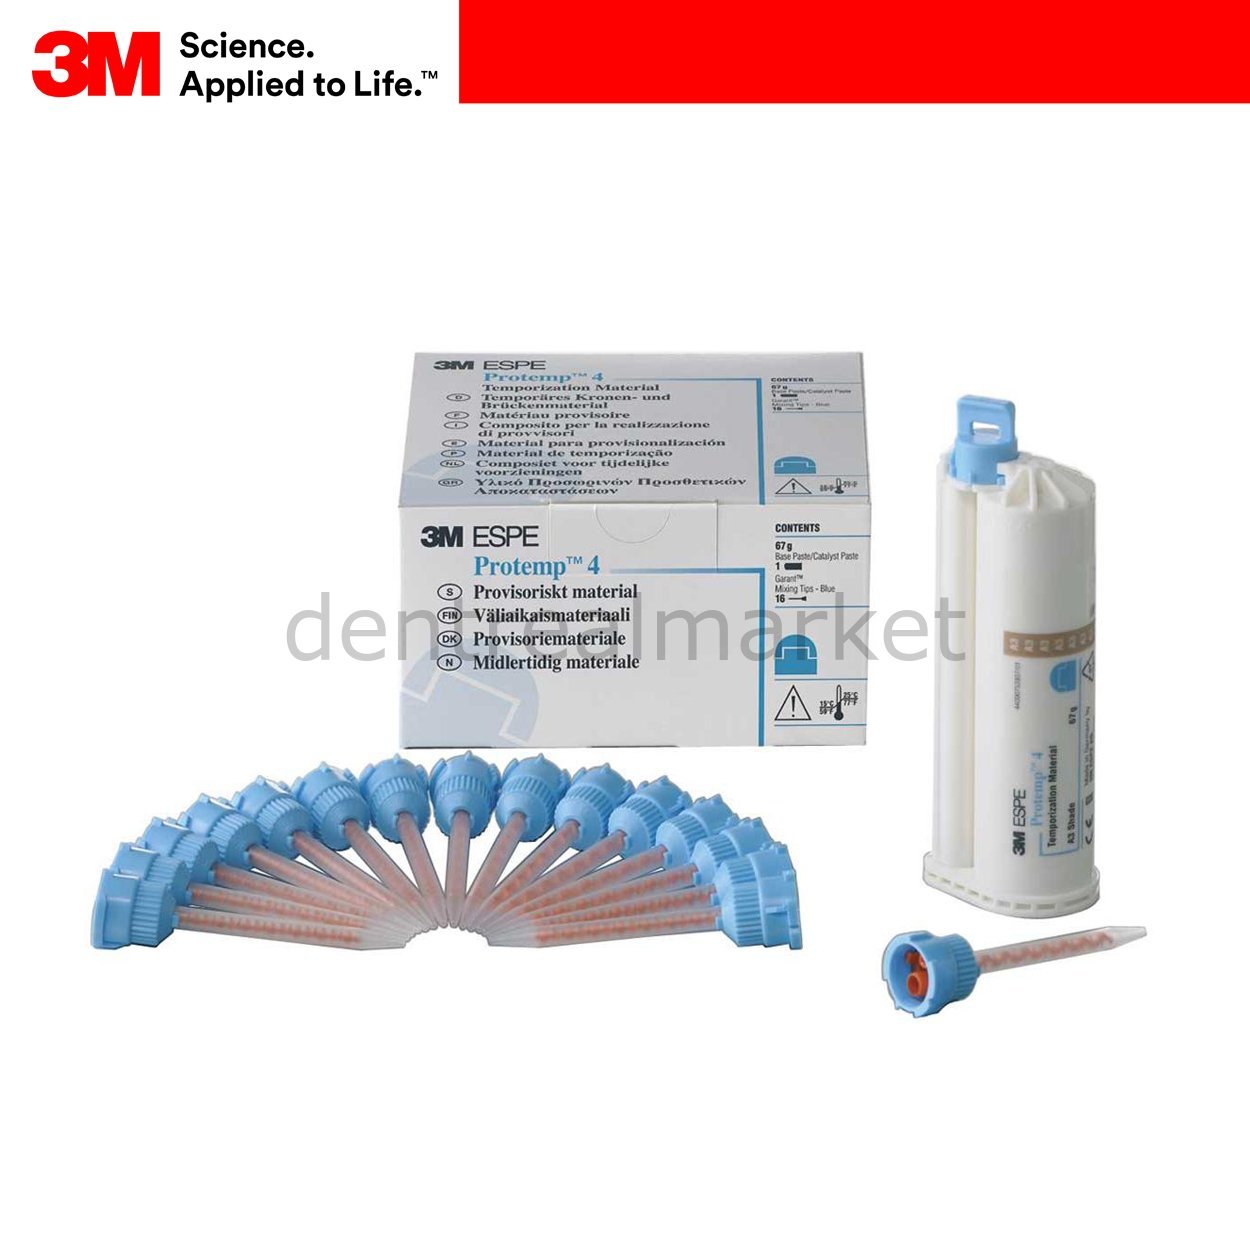 DentrealStore - 3M Protemp 4 Temporisation Material - C&B Temporary Material